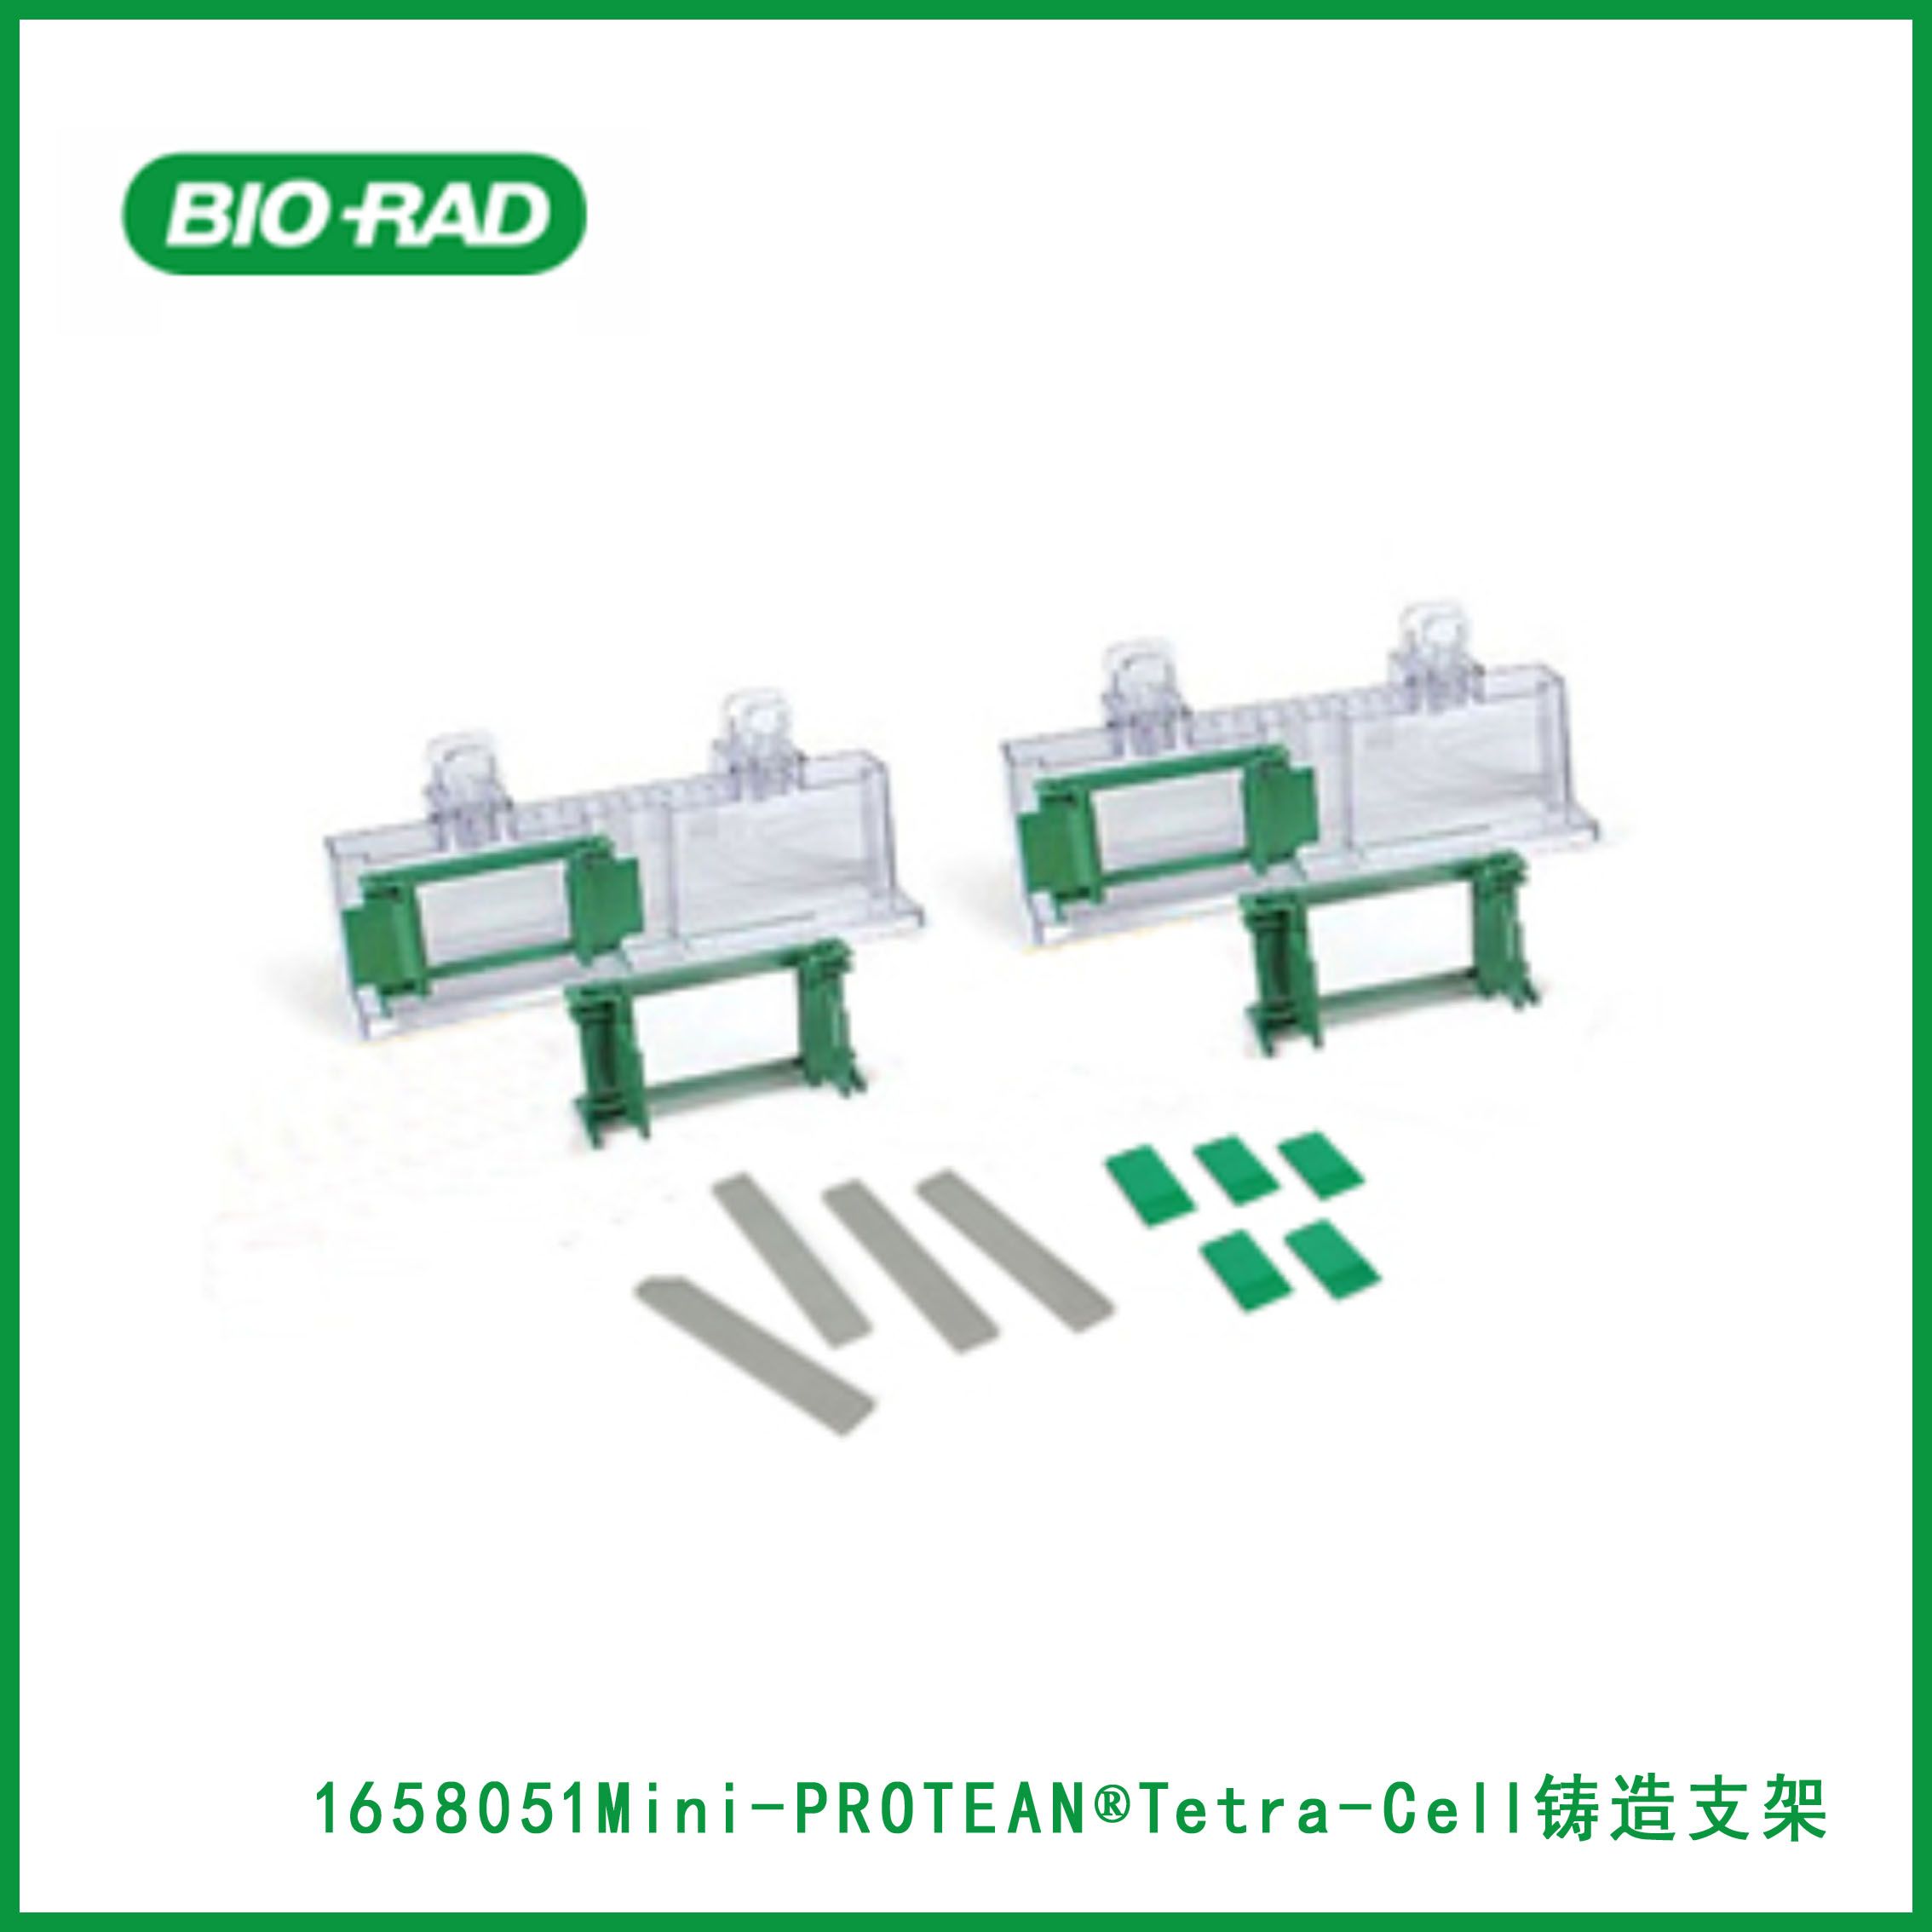 伯乐Bio-Rad1658051 Mini-PROTEAN® Tetra Cell Casting Stand with Clamp Kit for 2 Core System, Mini-PROTEAN®Tetra-Cell铸造支架，带夹钳套件，适用于2芯系统